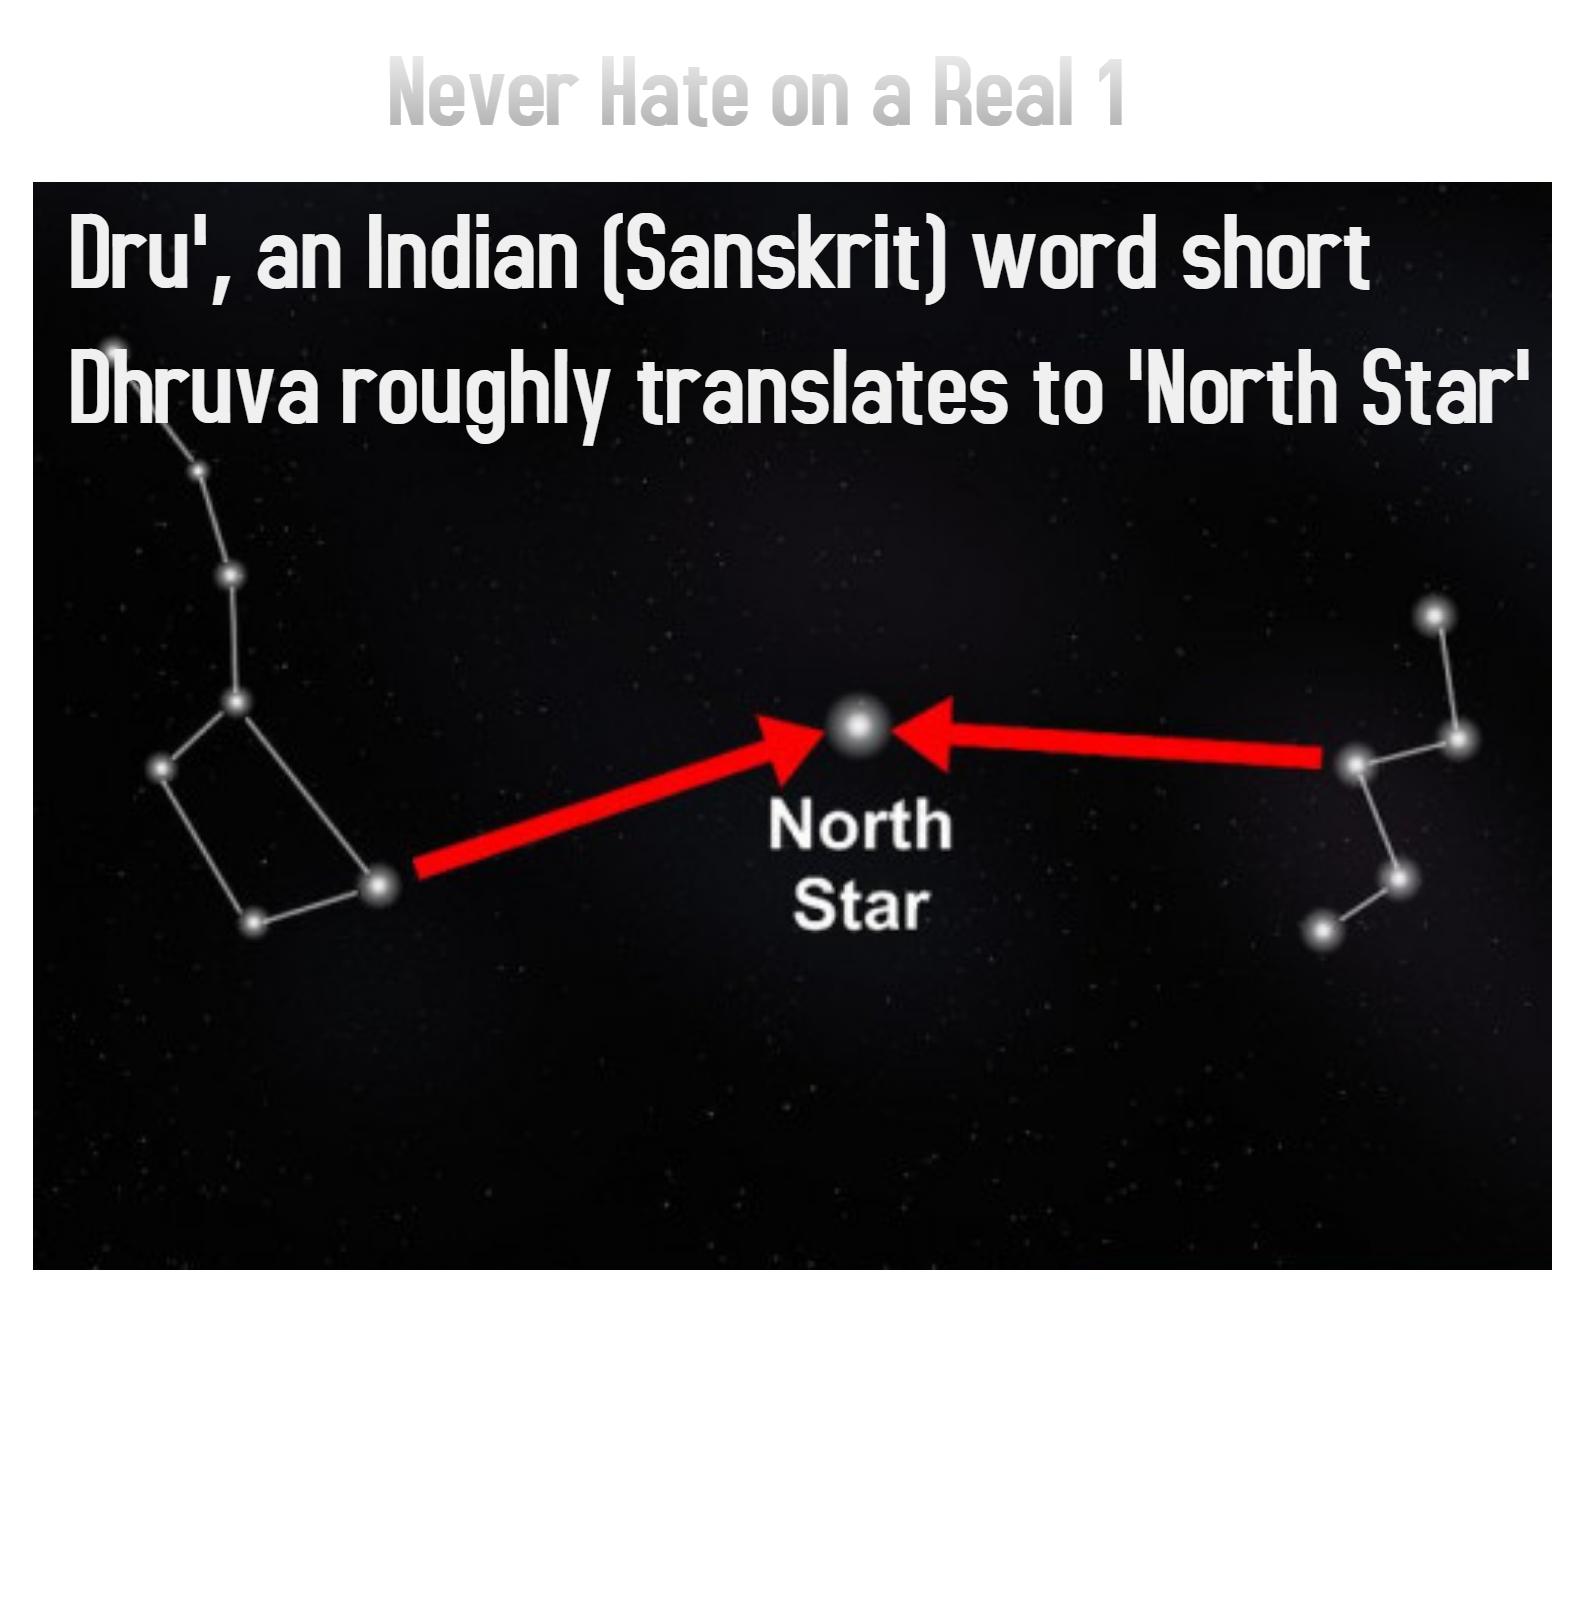 "'Dru', an Indian (Sanskrit) word short for Dhruva roughly translates to 'North Star' 